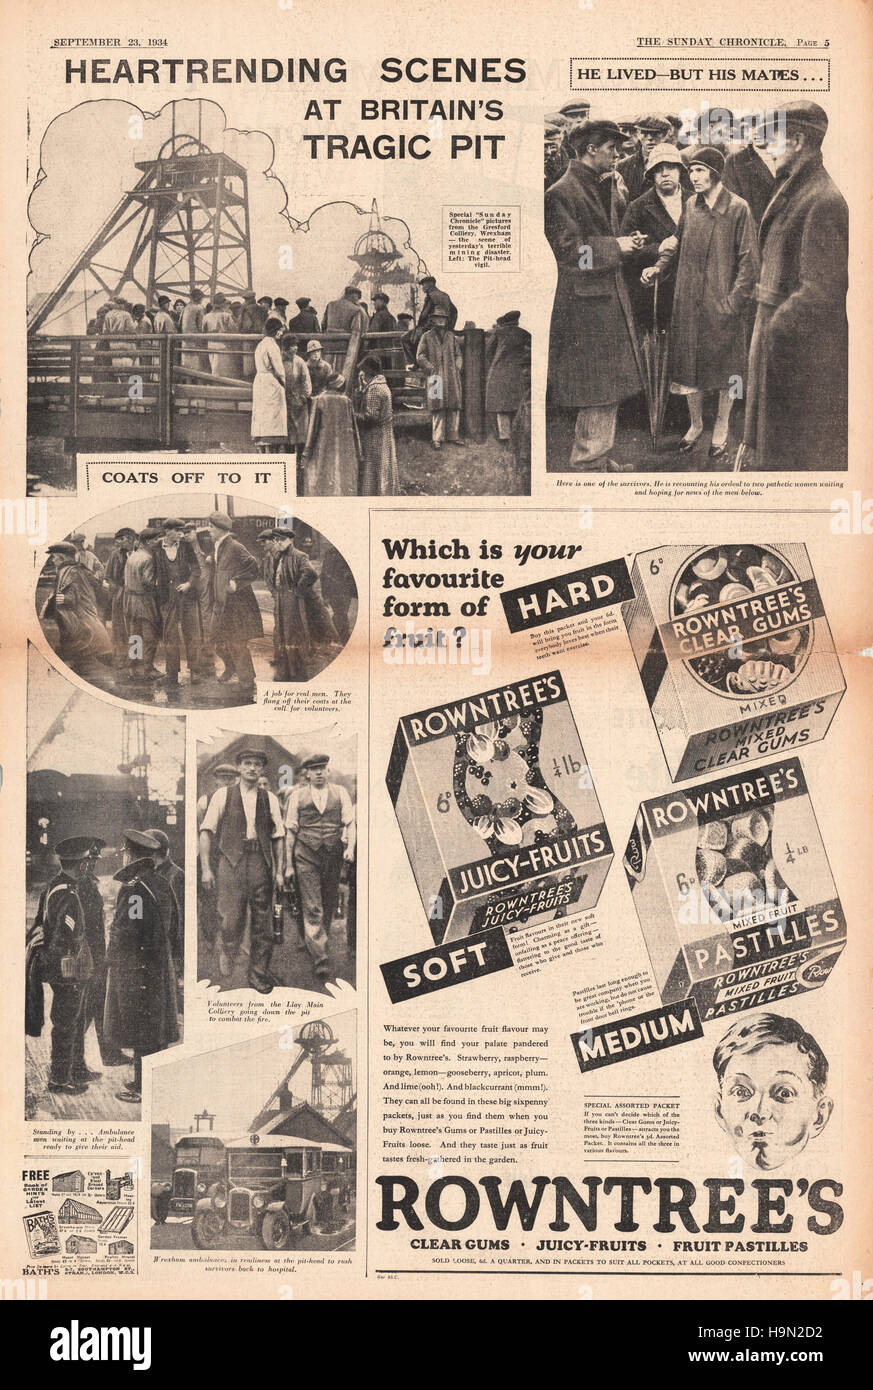 1934 Domenica cronaca pagina 3 Onchan Colliery catastrofe mineraria Foto Stock